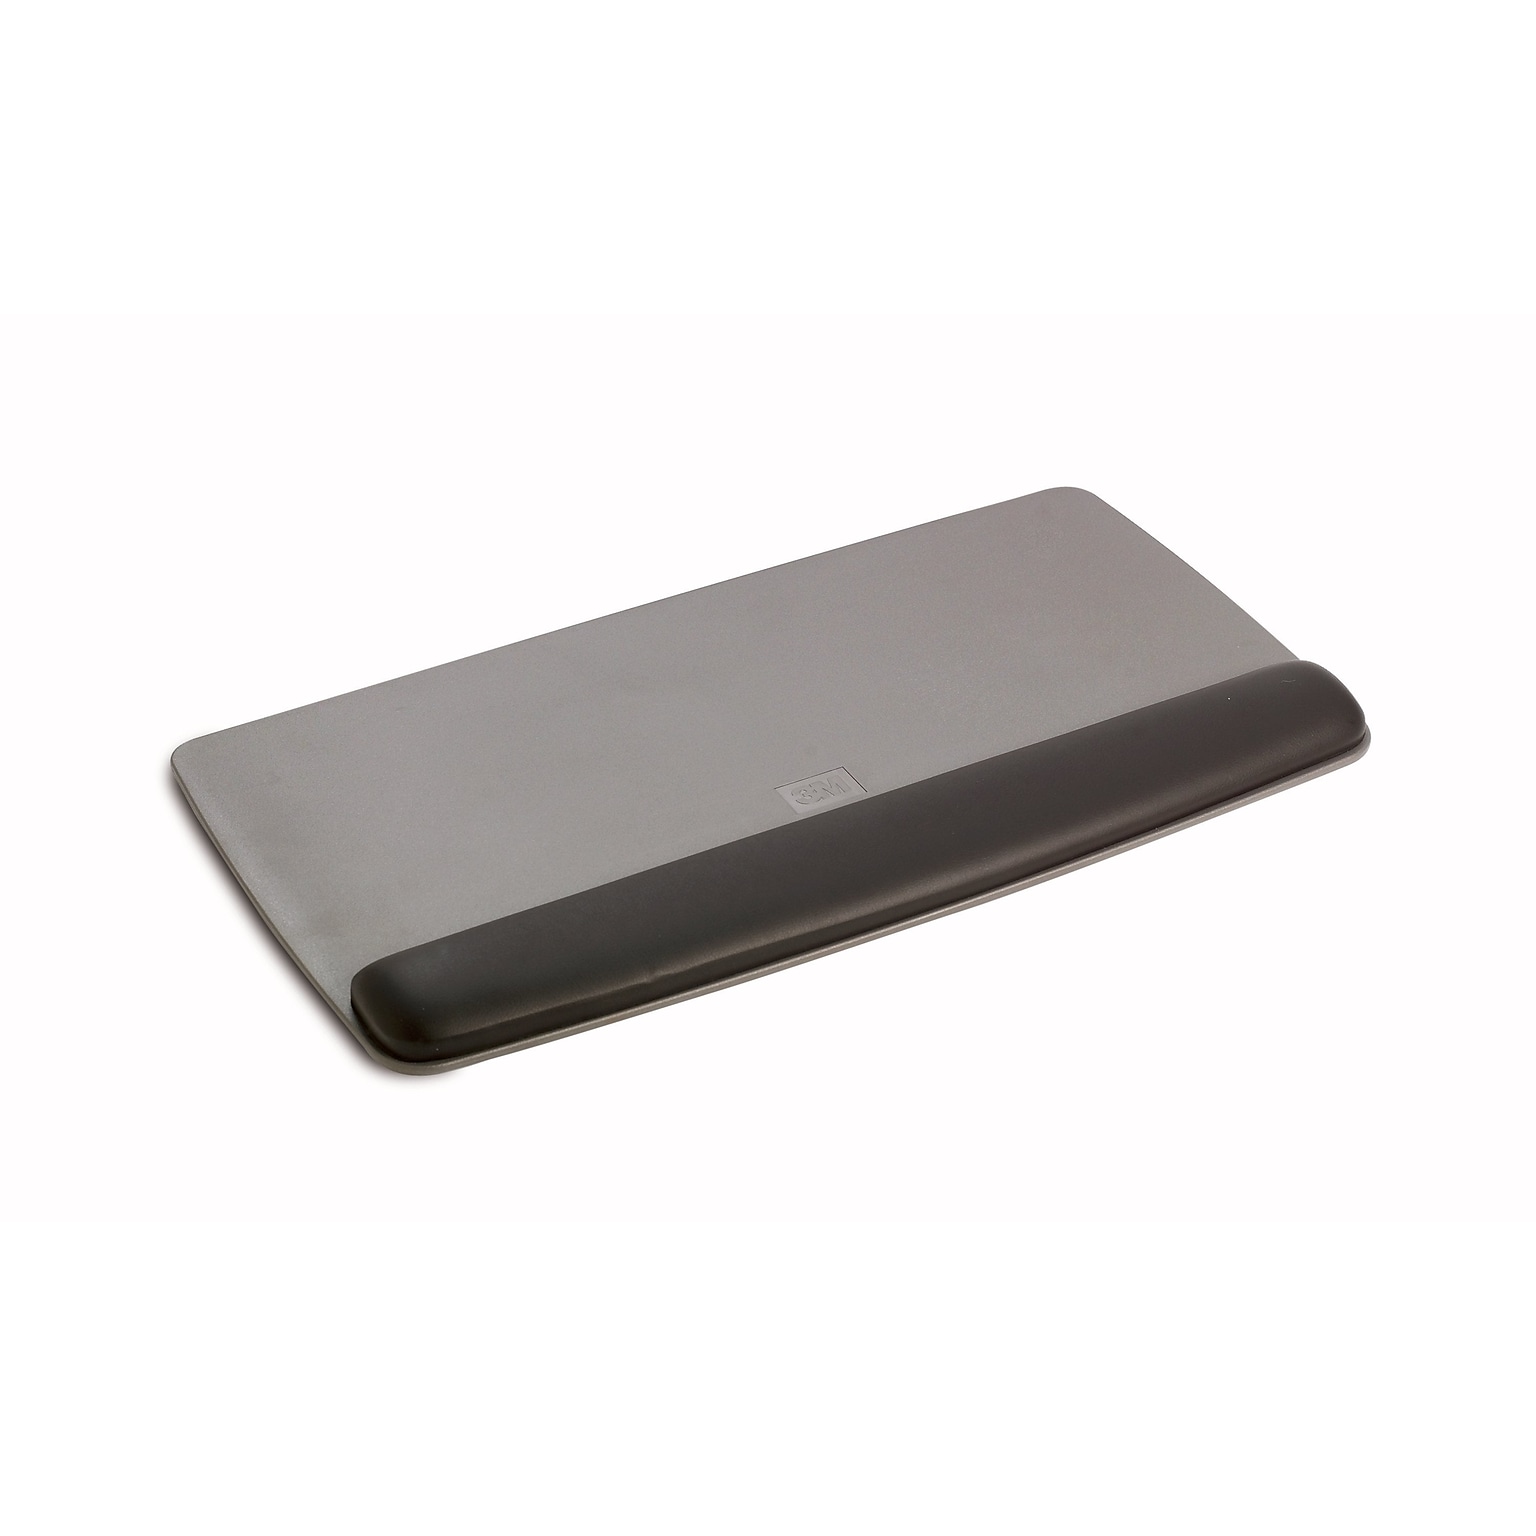 3M™ Gel Wrist Rest with Platform for Keyboard, Gray, Tilt Adjustable,  Precise Mouse Pad (WR420LE) | Quill.com